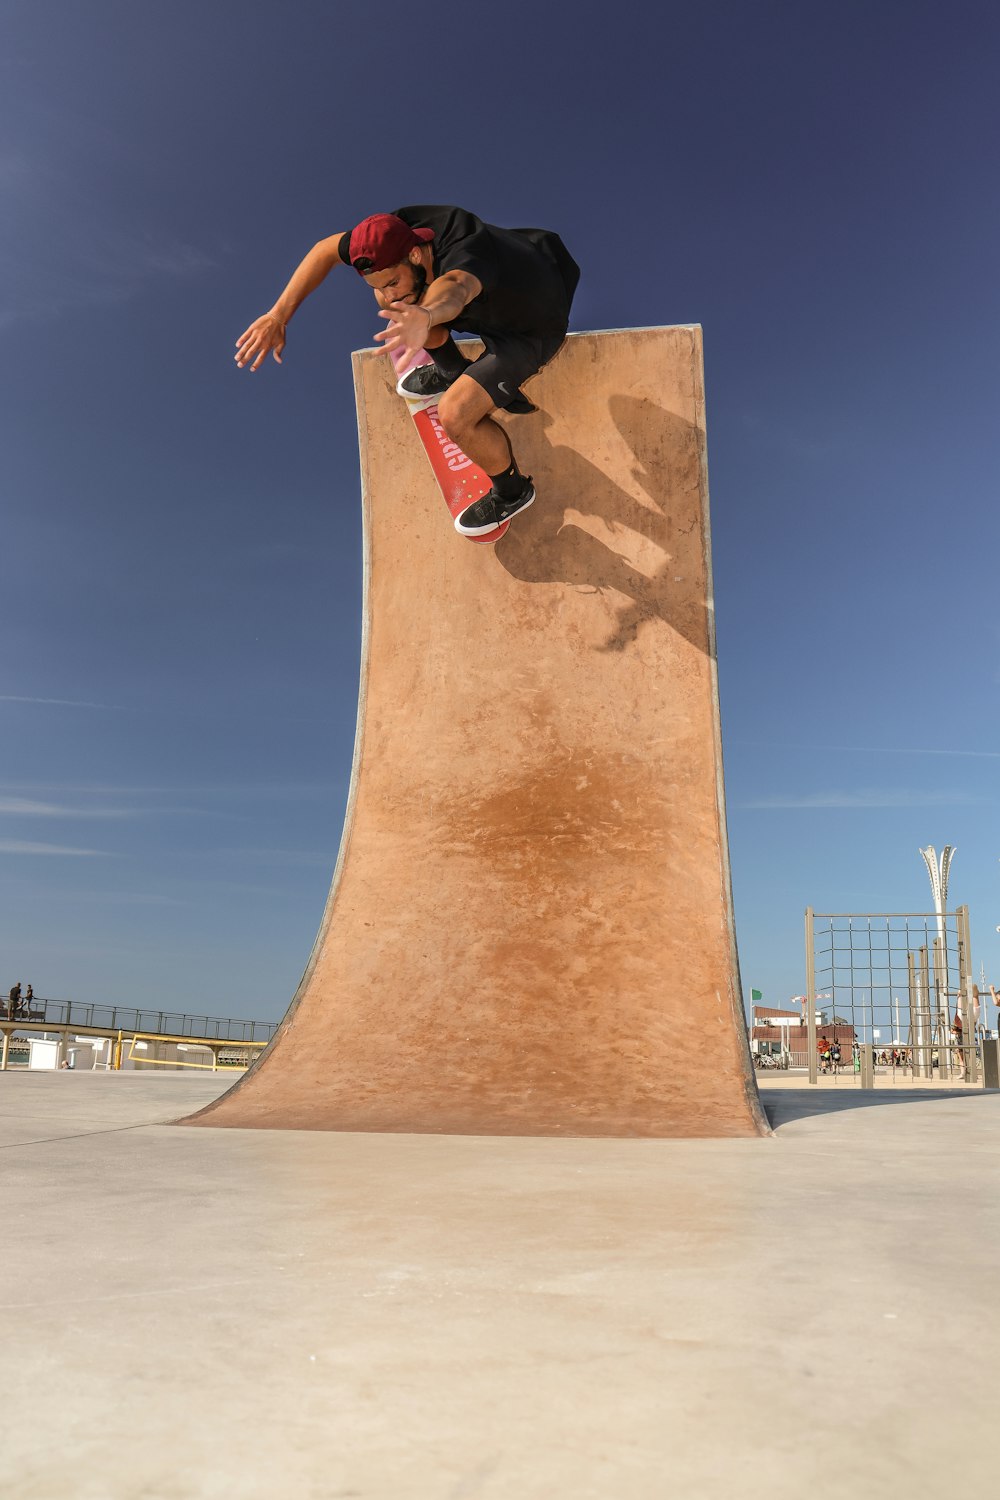 a man jumping on a skateboard